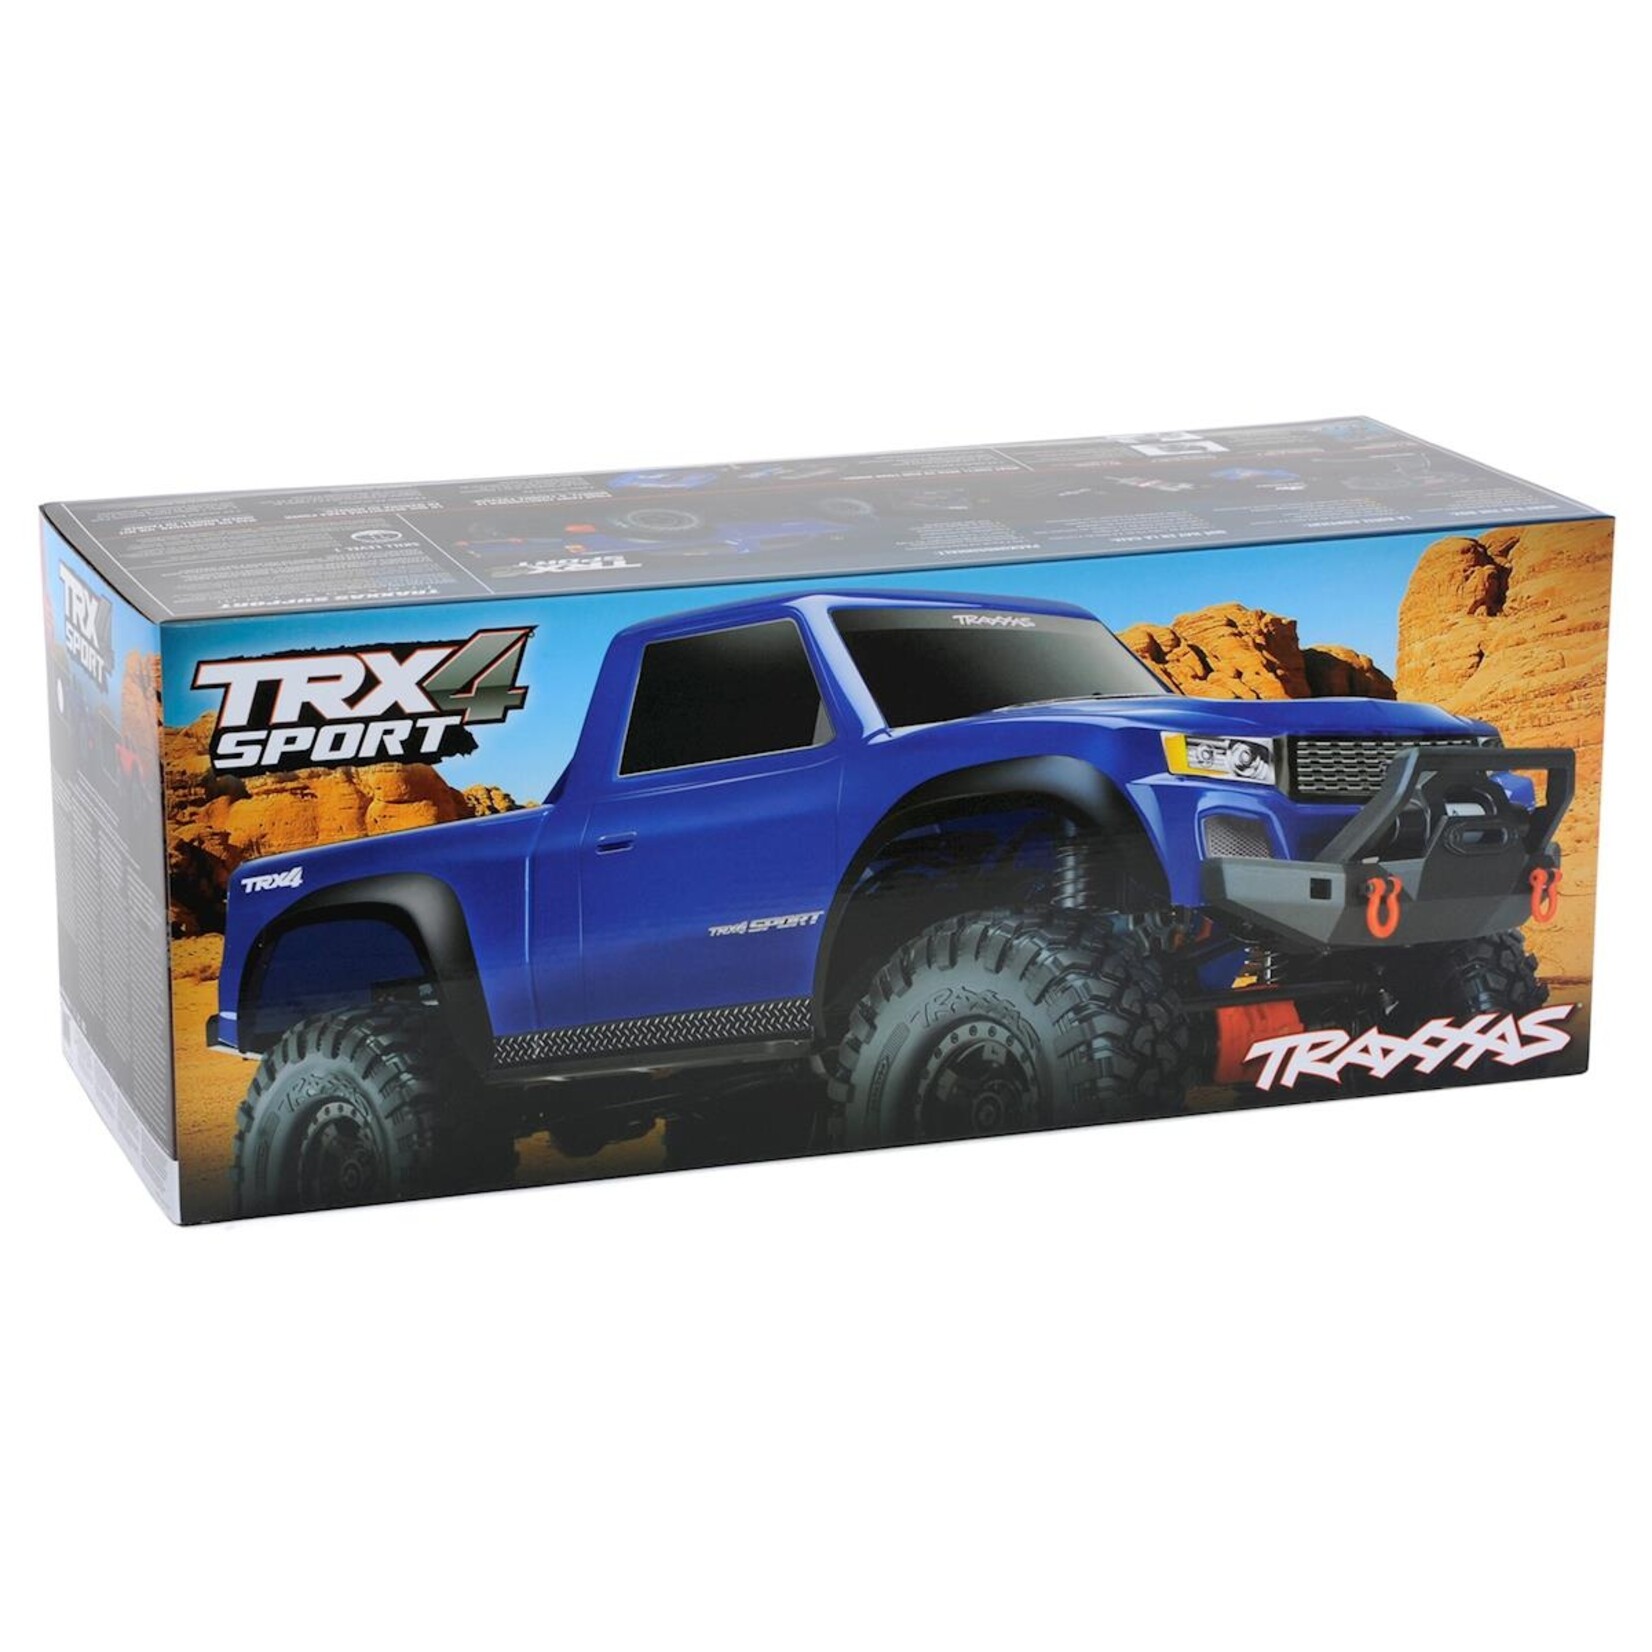 Traxxas Traxxas TRX-4 Sport 1/10 Scale Trail Rock Crawler (Tan) w/XL-5 HV ESC & TQ 2.4GHz Radio #82024-4-TAN